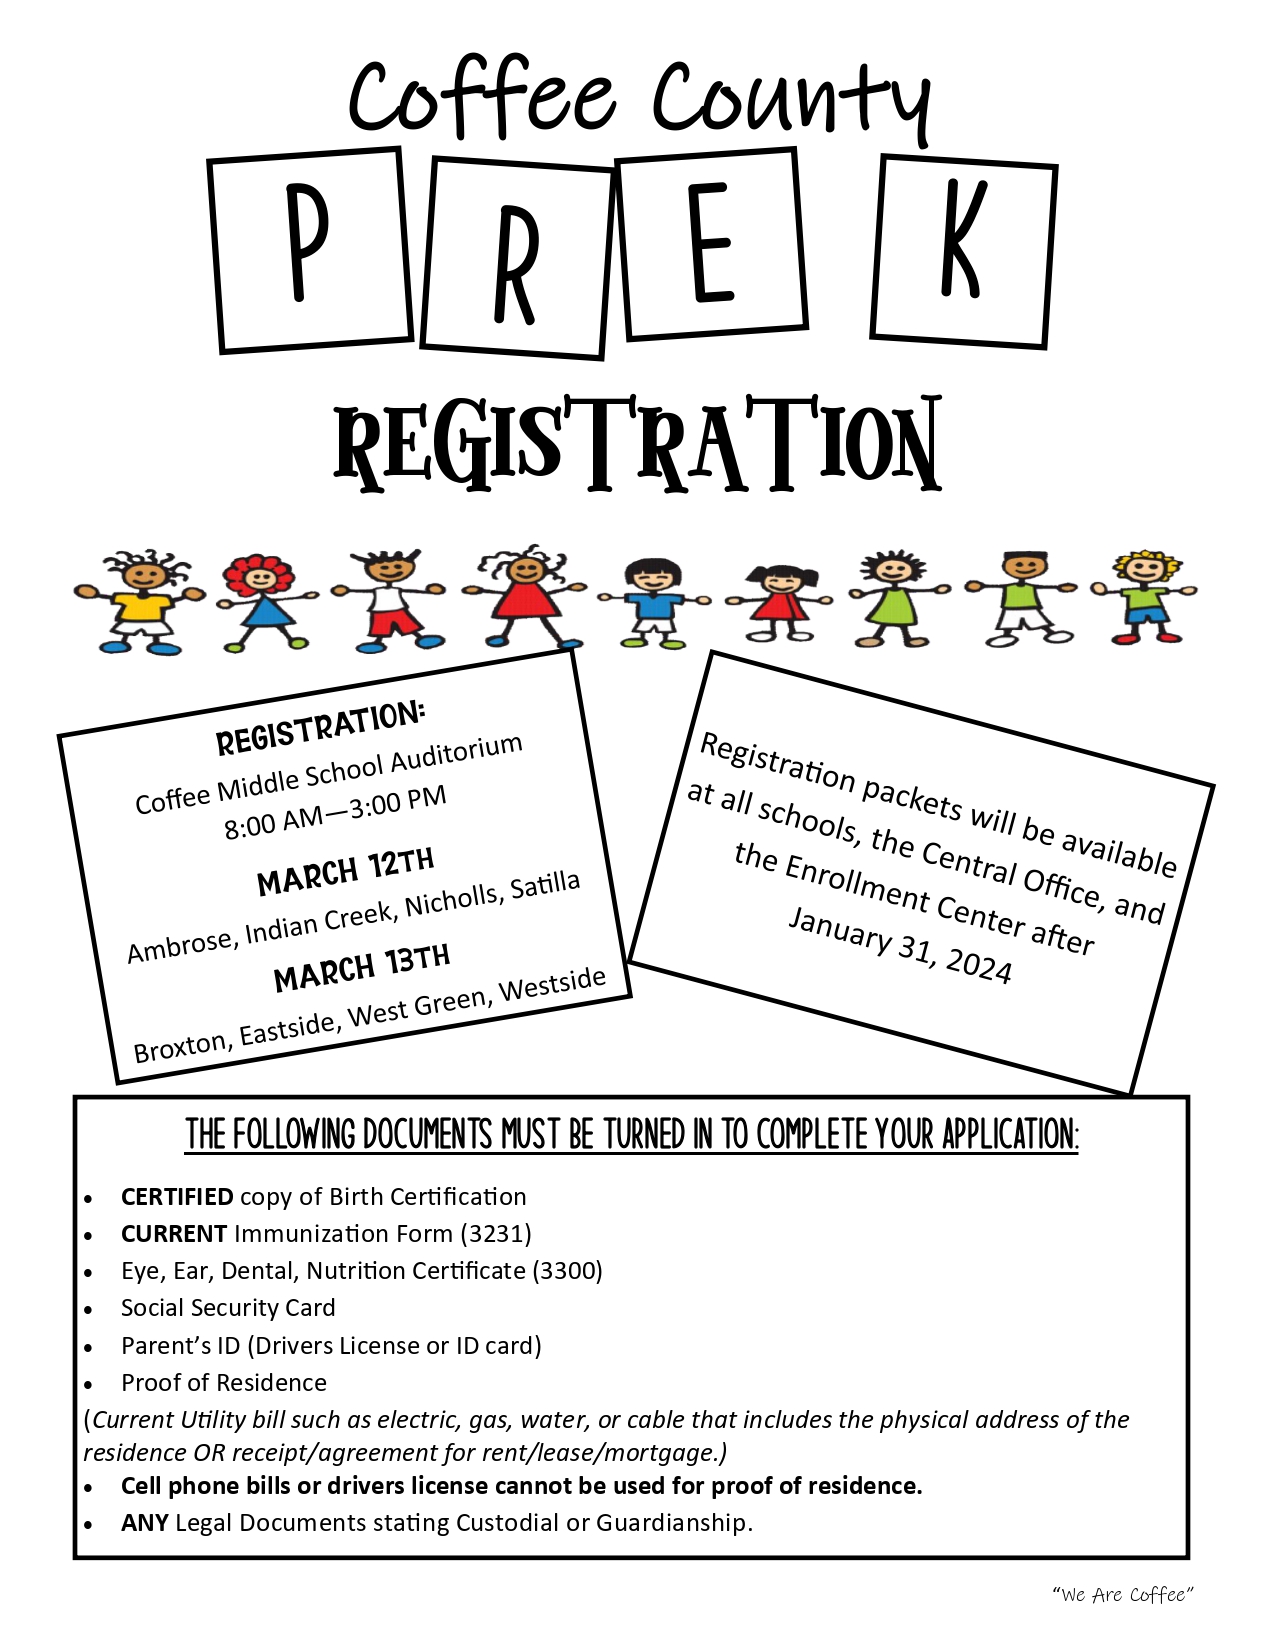 Pre-K Registration flyer (English)